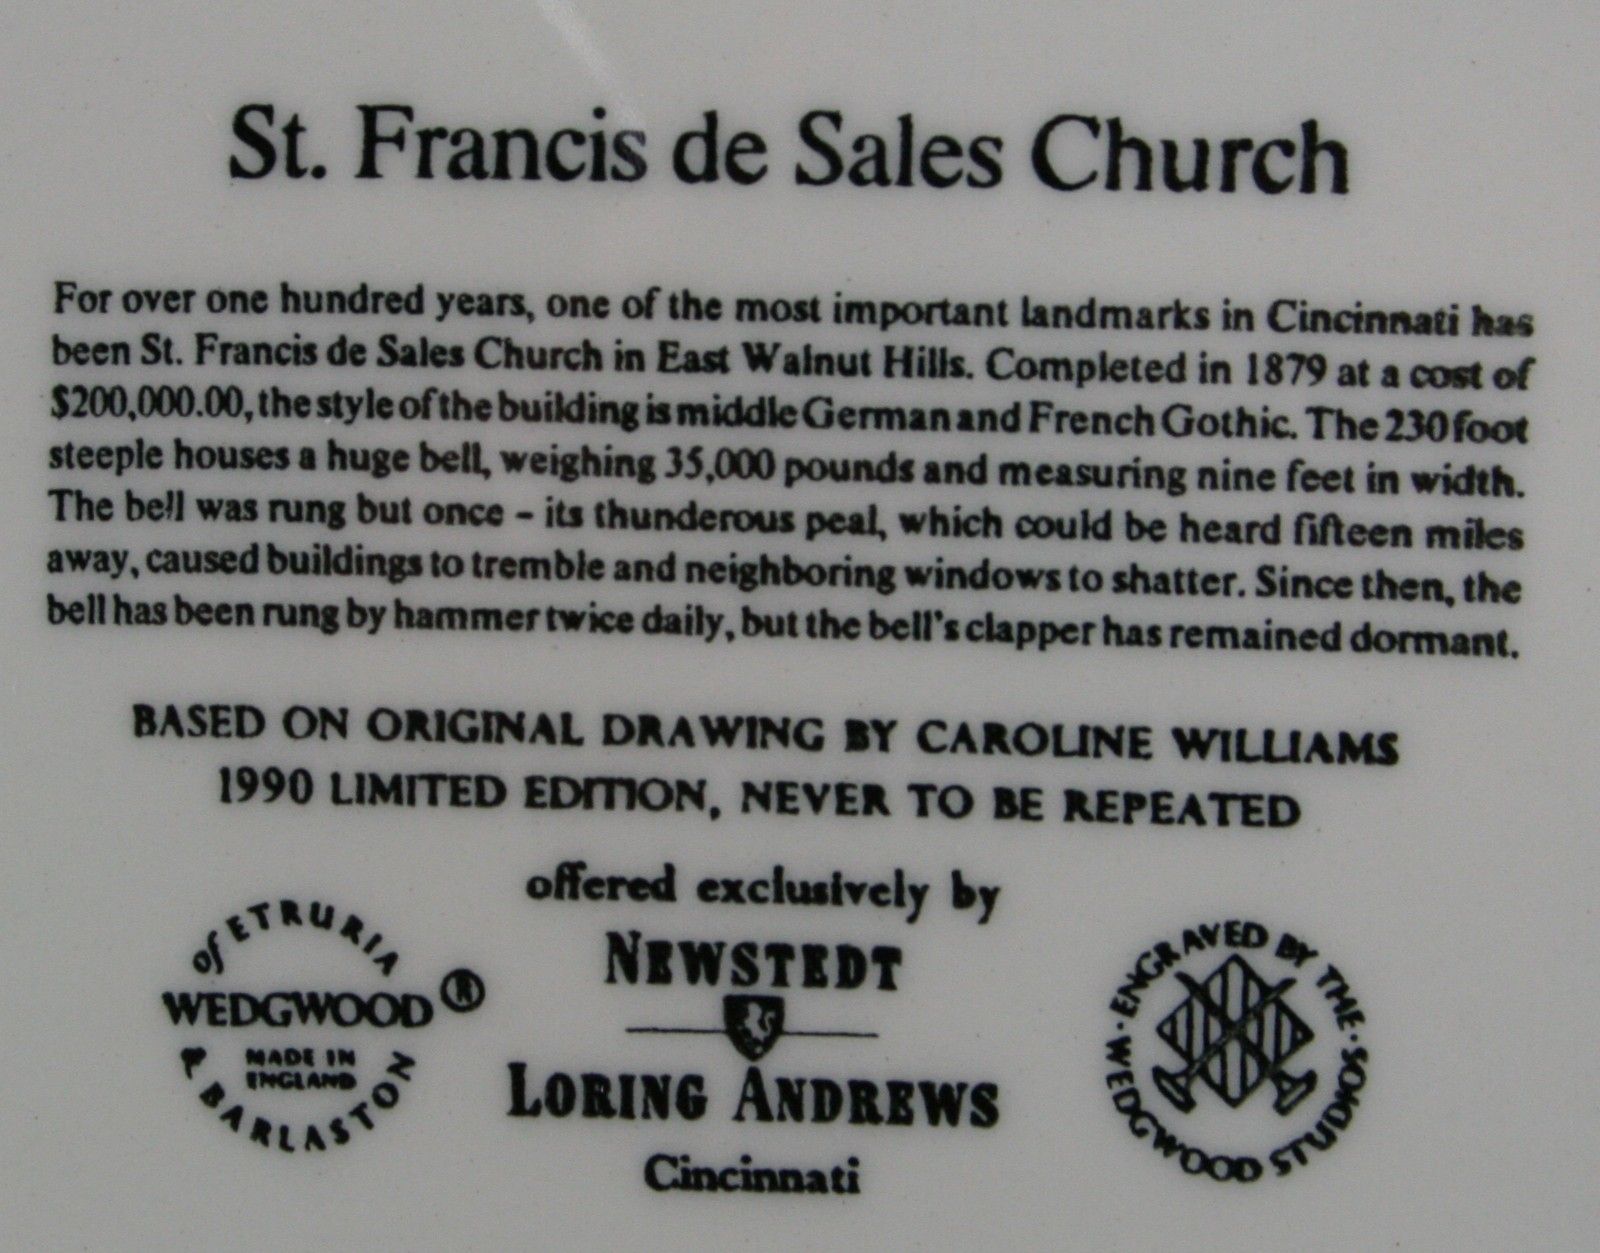 Caroline Williams 1990 Cincinnati St Francis de Sales Church Wedgwood